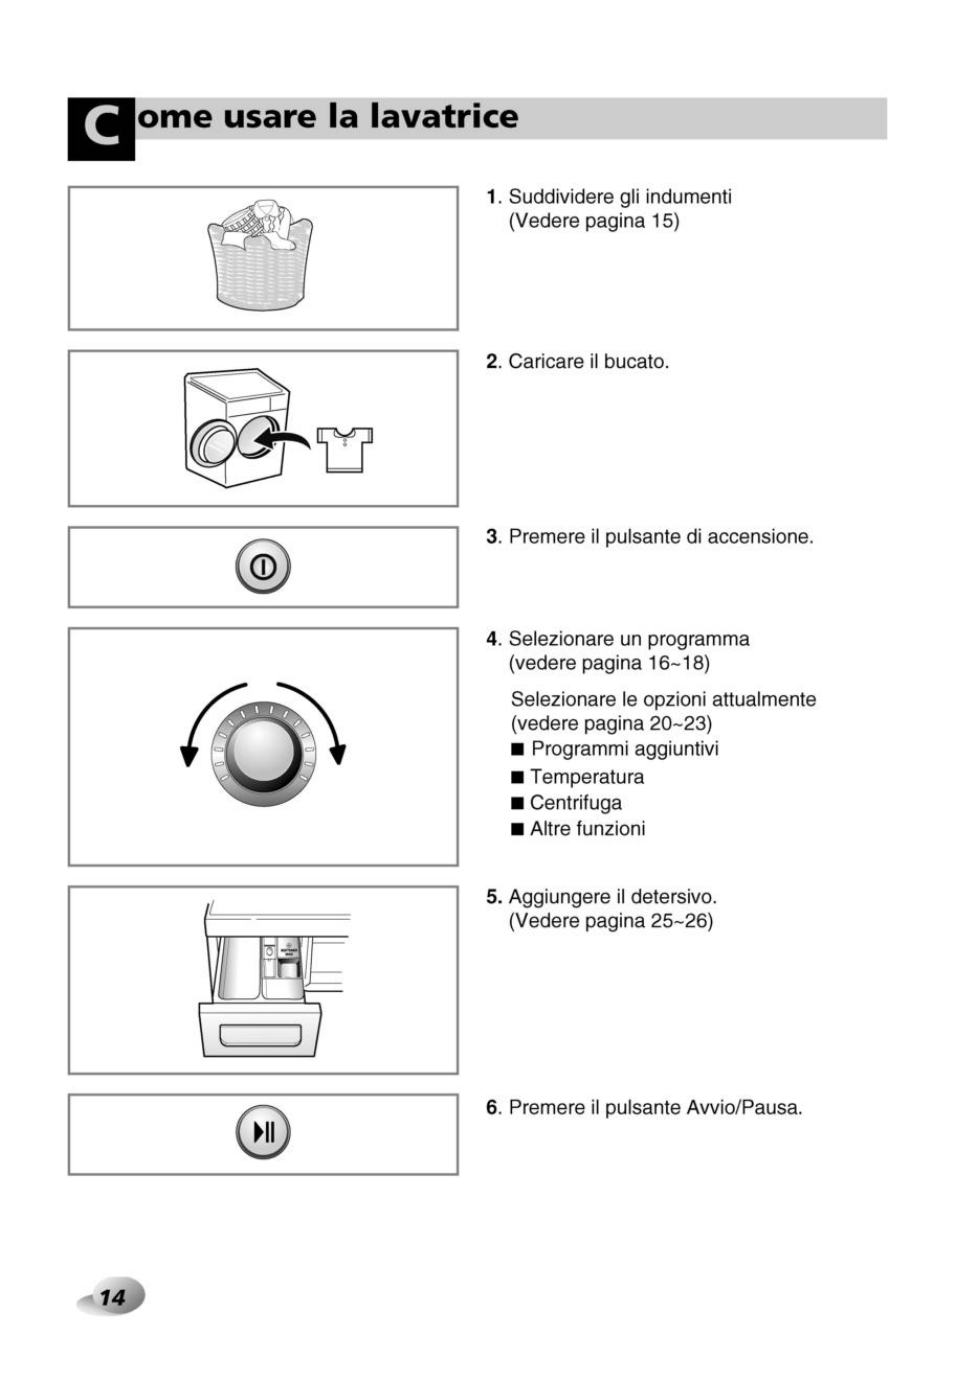 Orne usare la lavatrice | LG F1281TD Manuale d'uso | Pagina 14 / 36